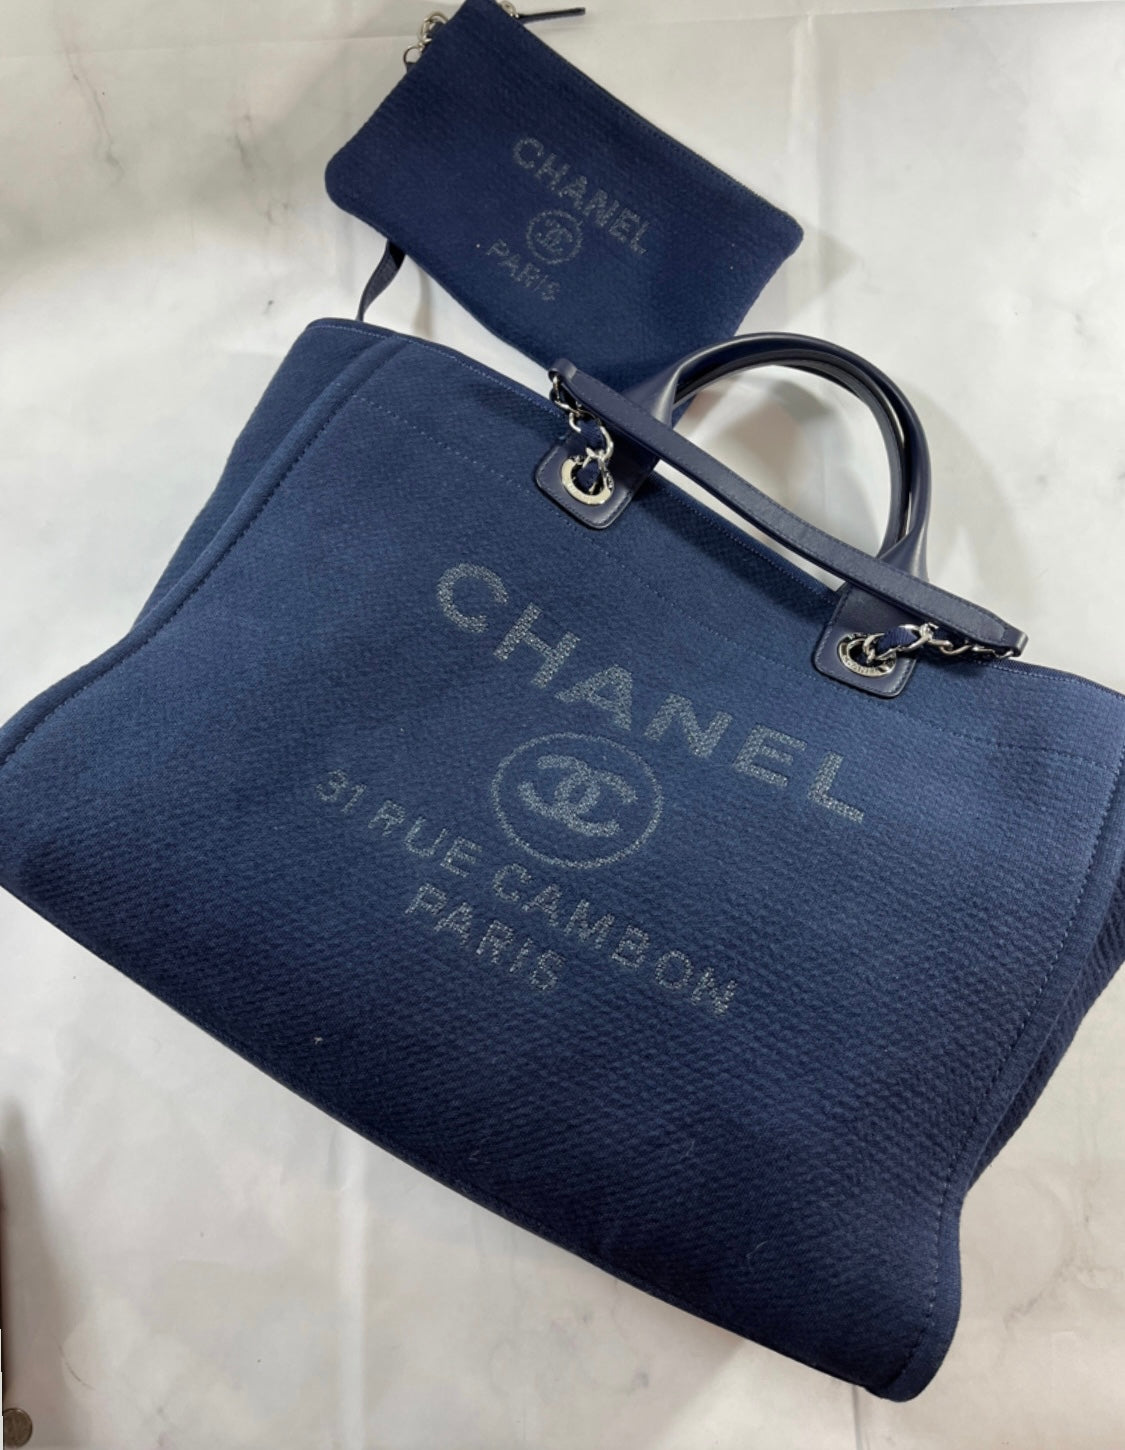 Chanel Bleu Fonce Large Deauville Tote Handbag